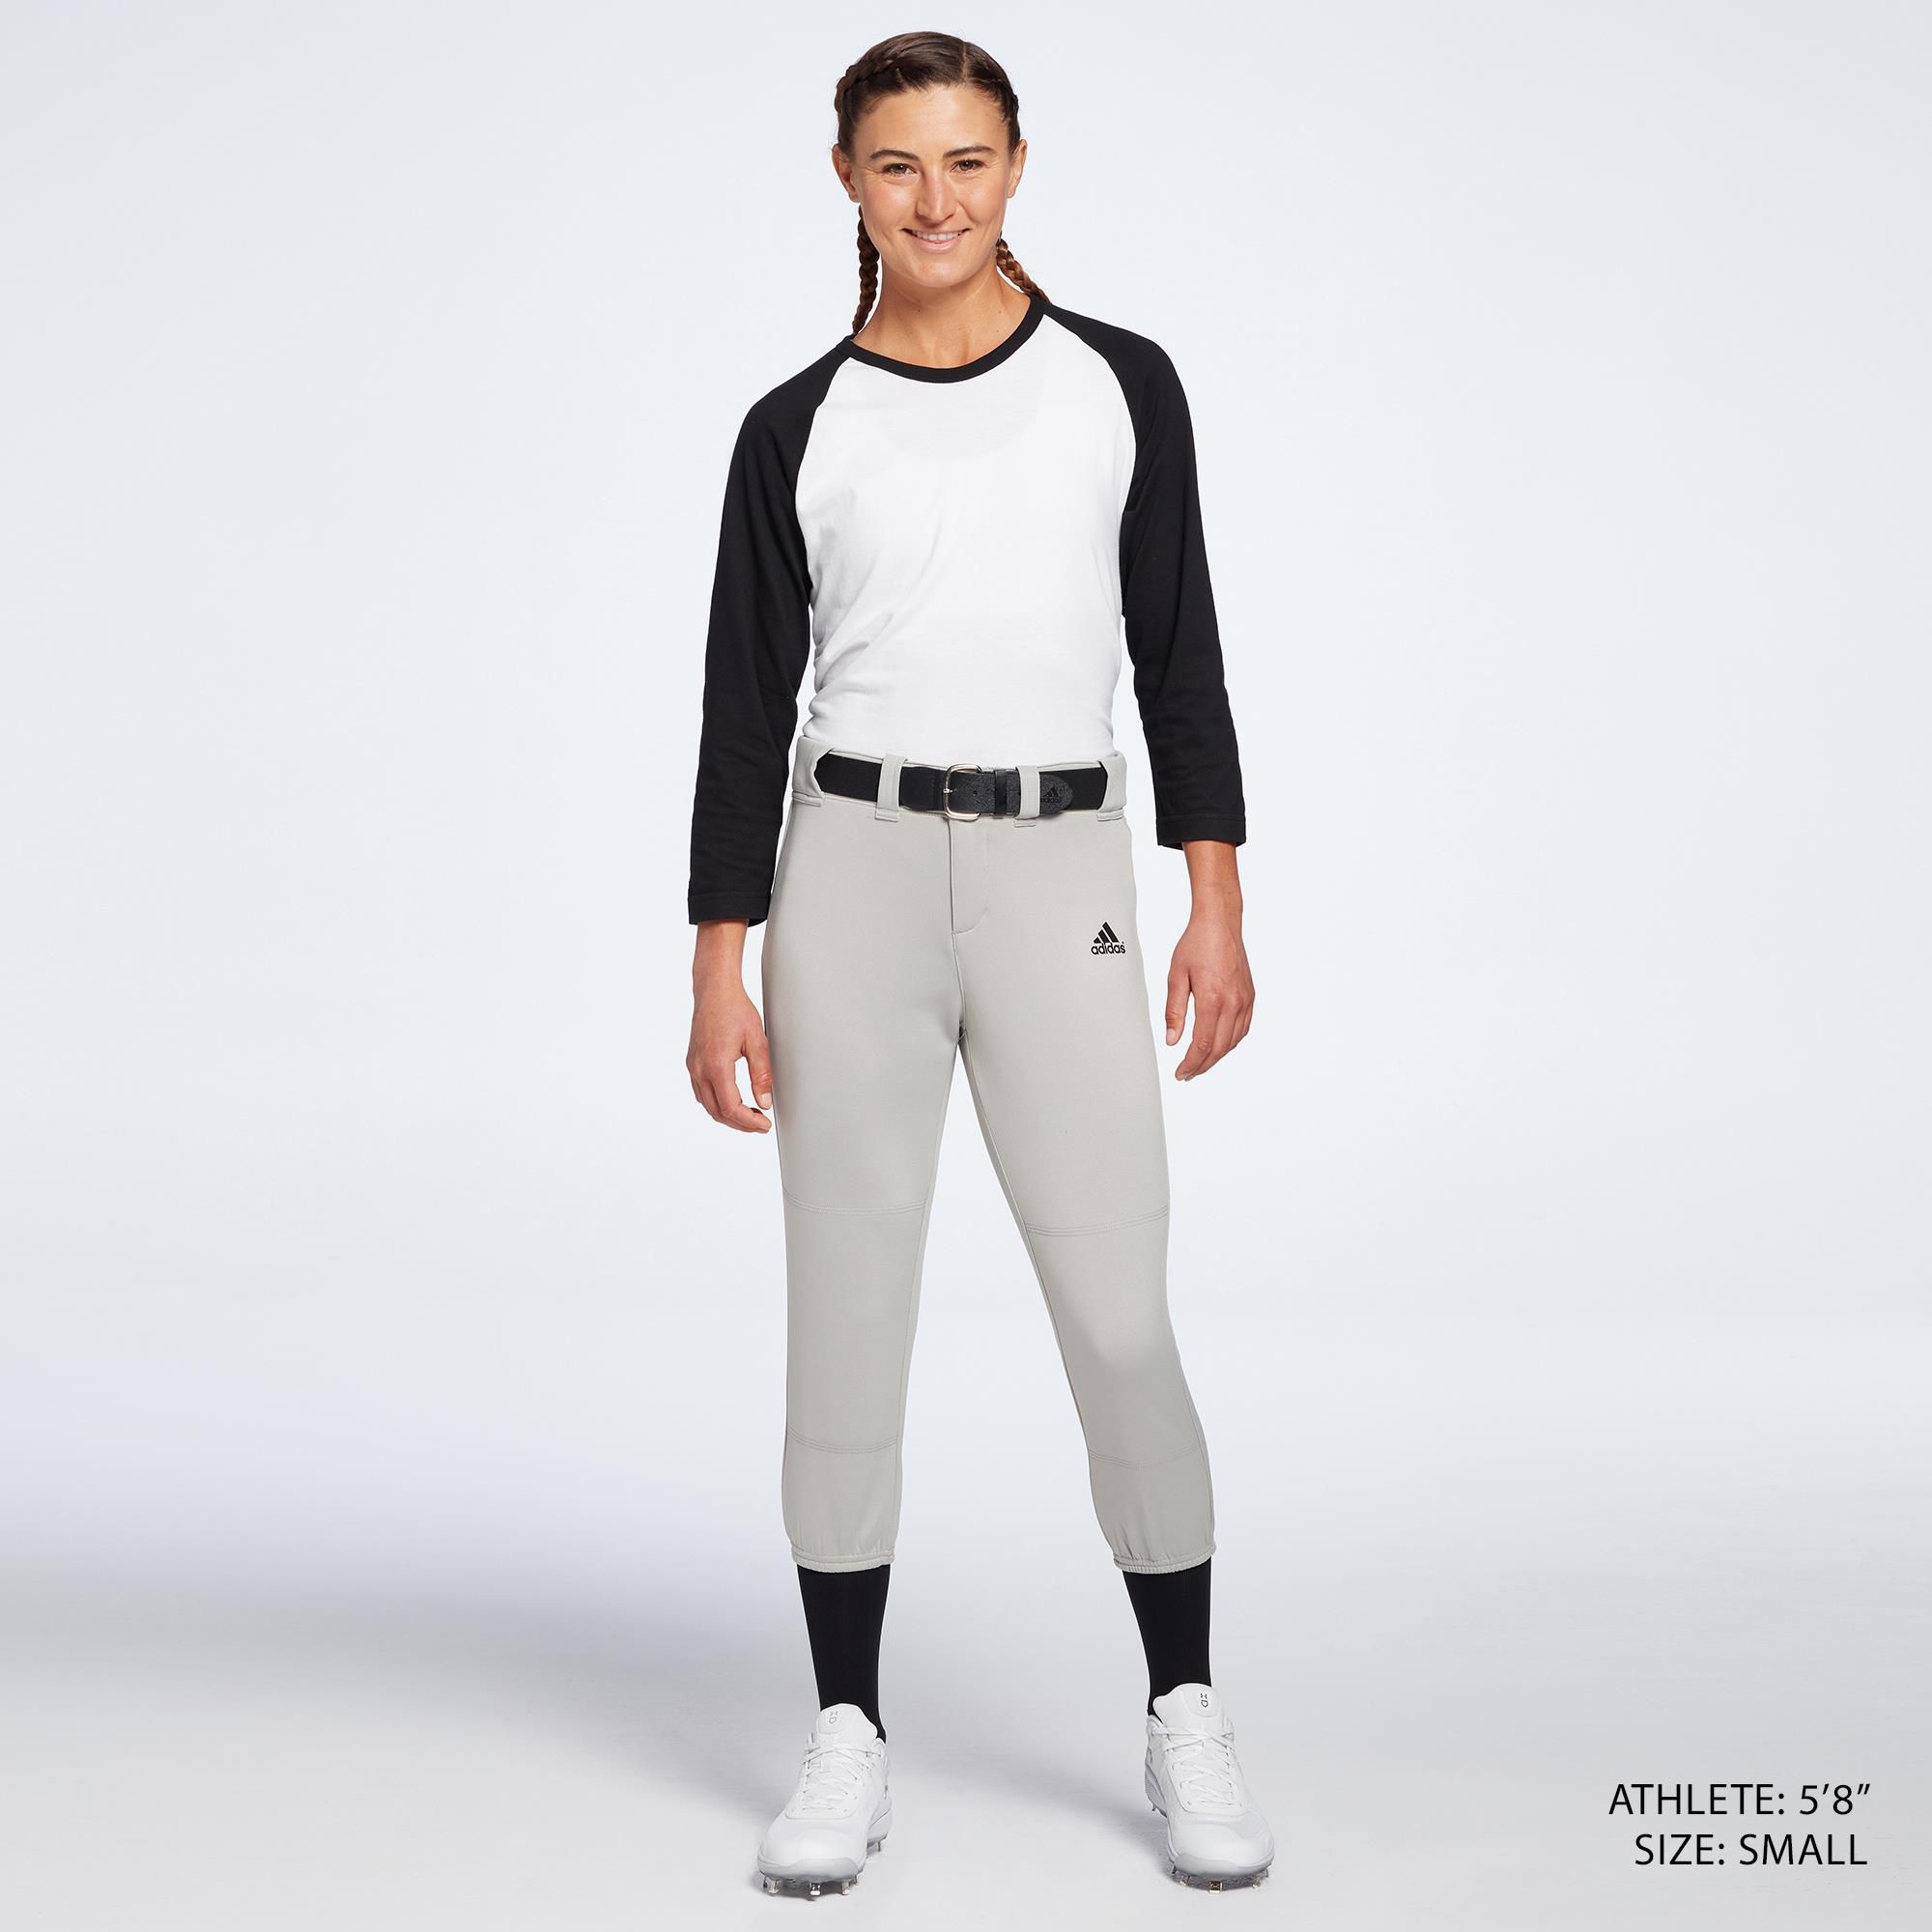 Dick's Sporting Goods Adidas Women's Softball Pants